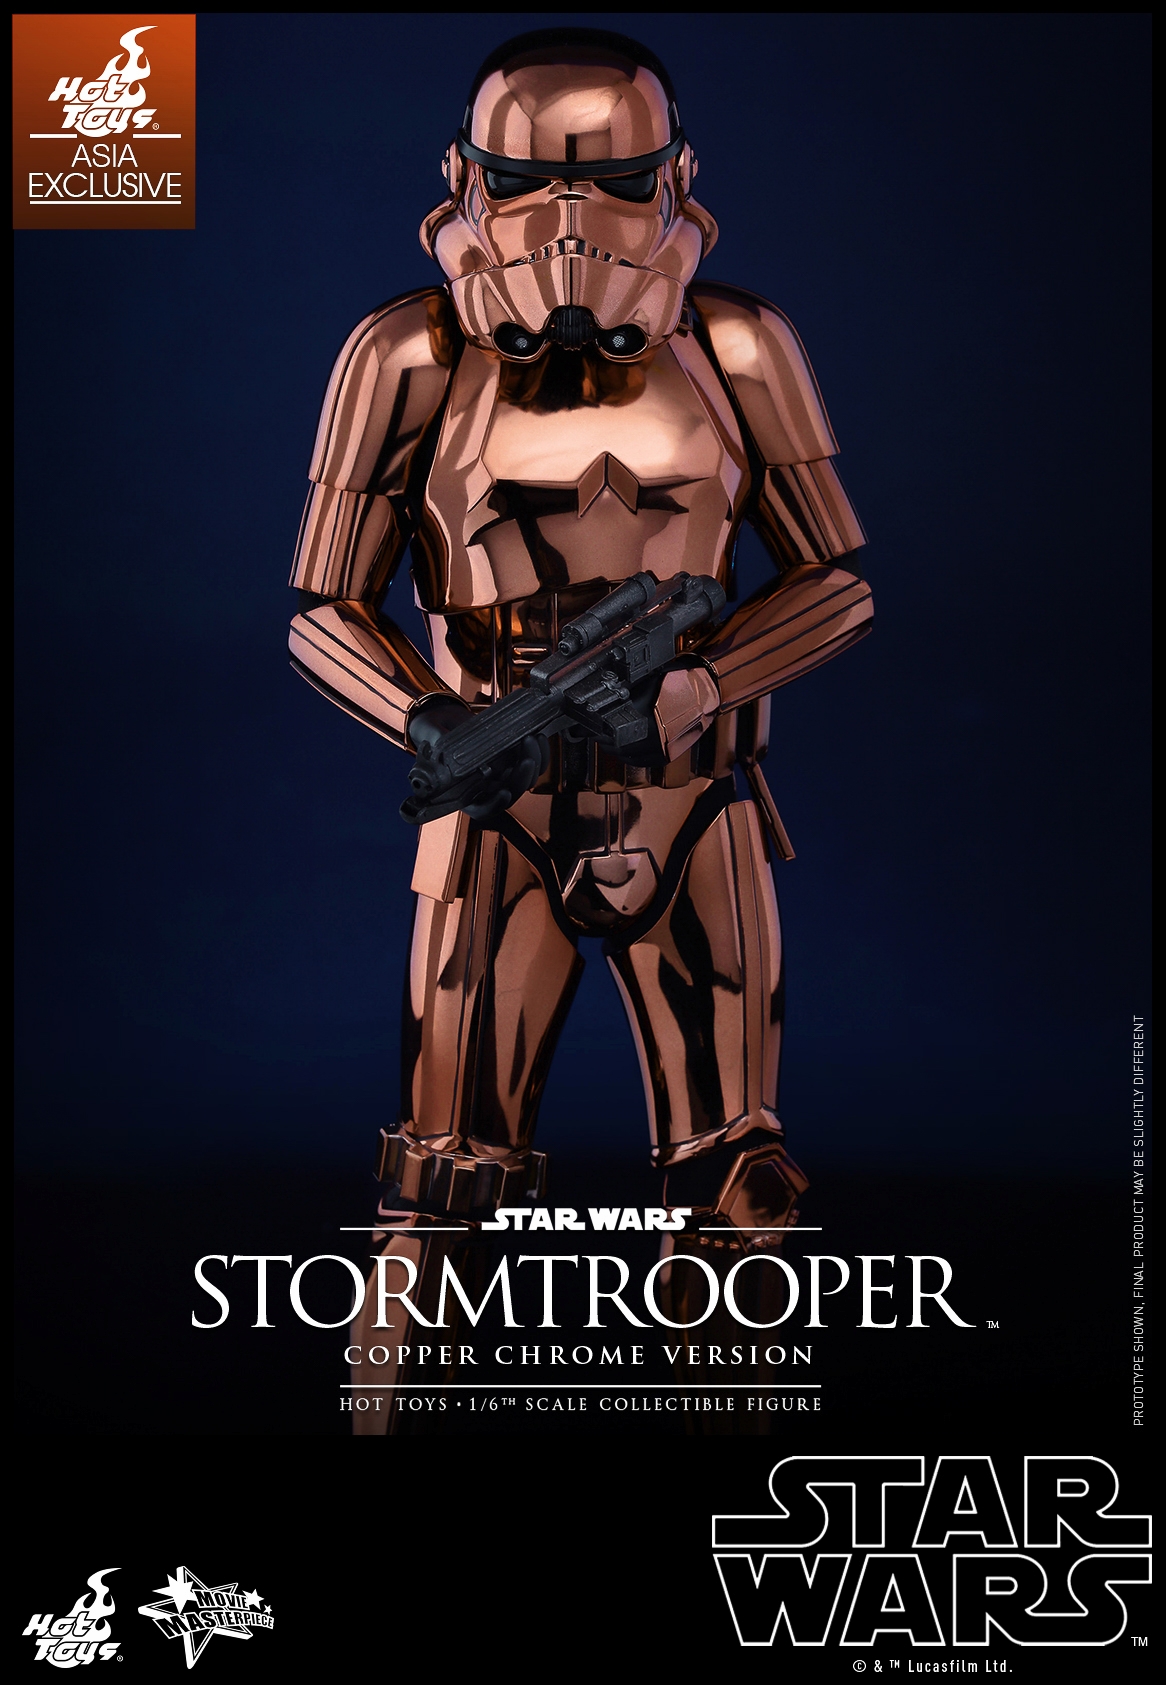 Hot-Toys-Stormtrooper-Copper-Chrome-Version-MMS330-002.jpg